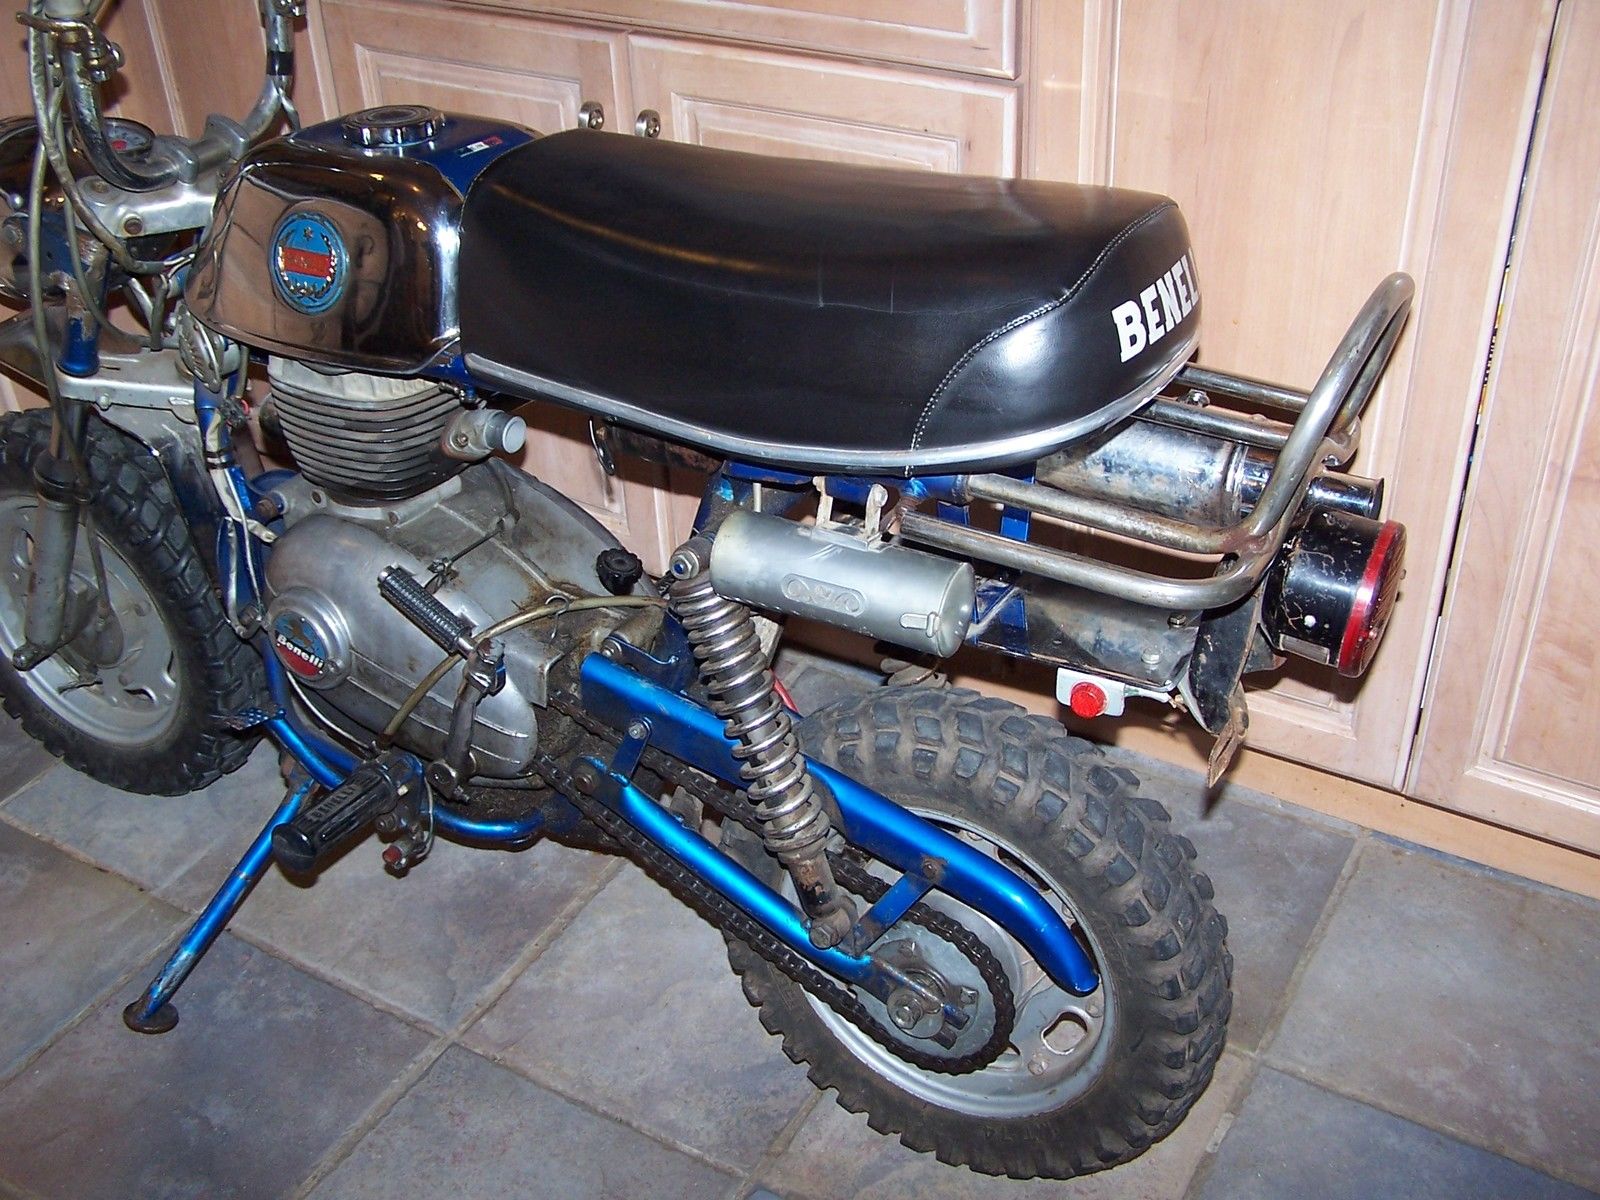 1970 Benelli Volcano 180cc Mini bike Motorcycle Nice Condition! Vintage!